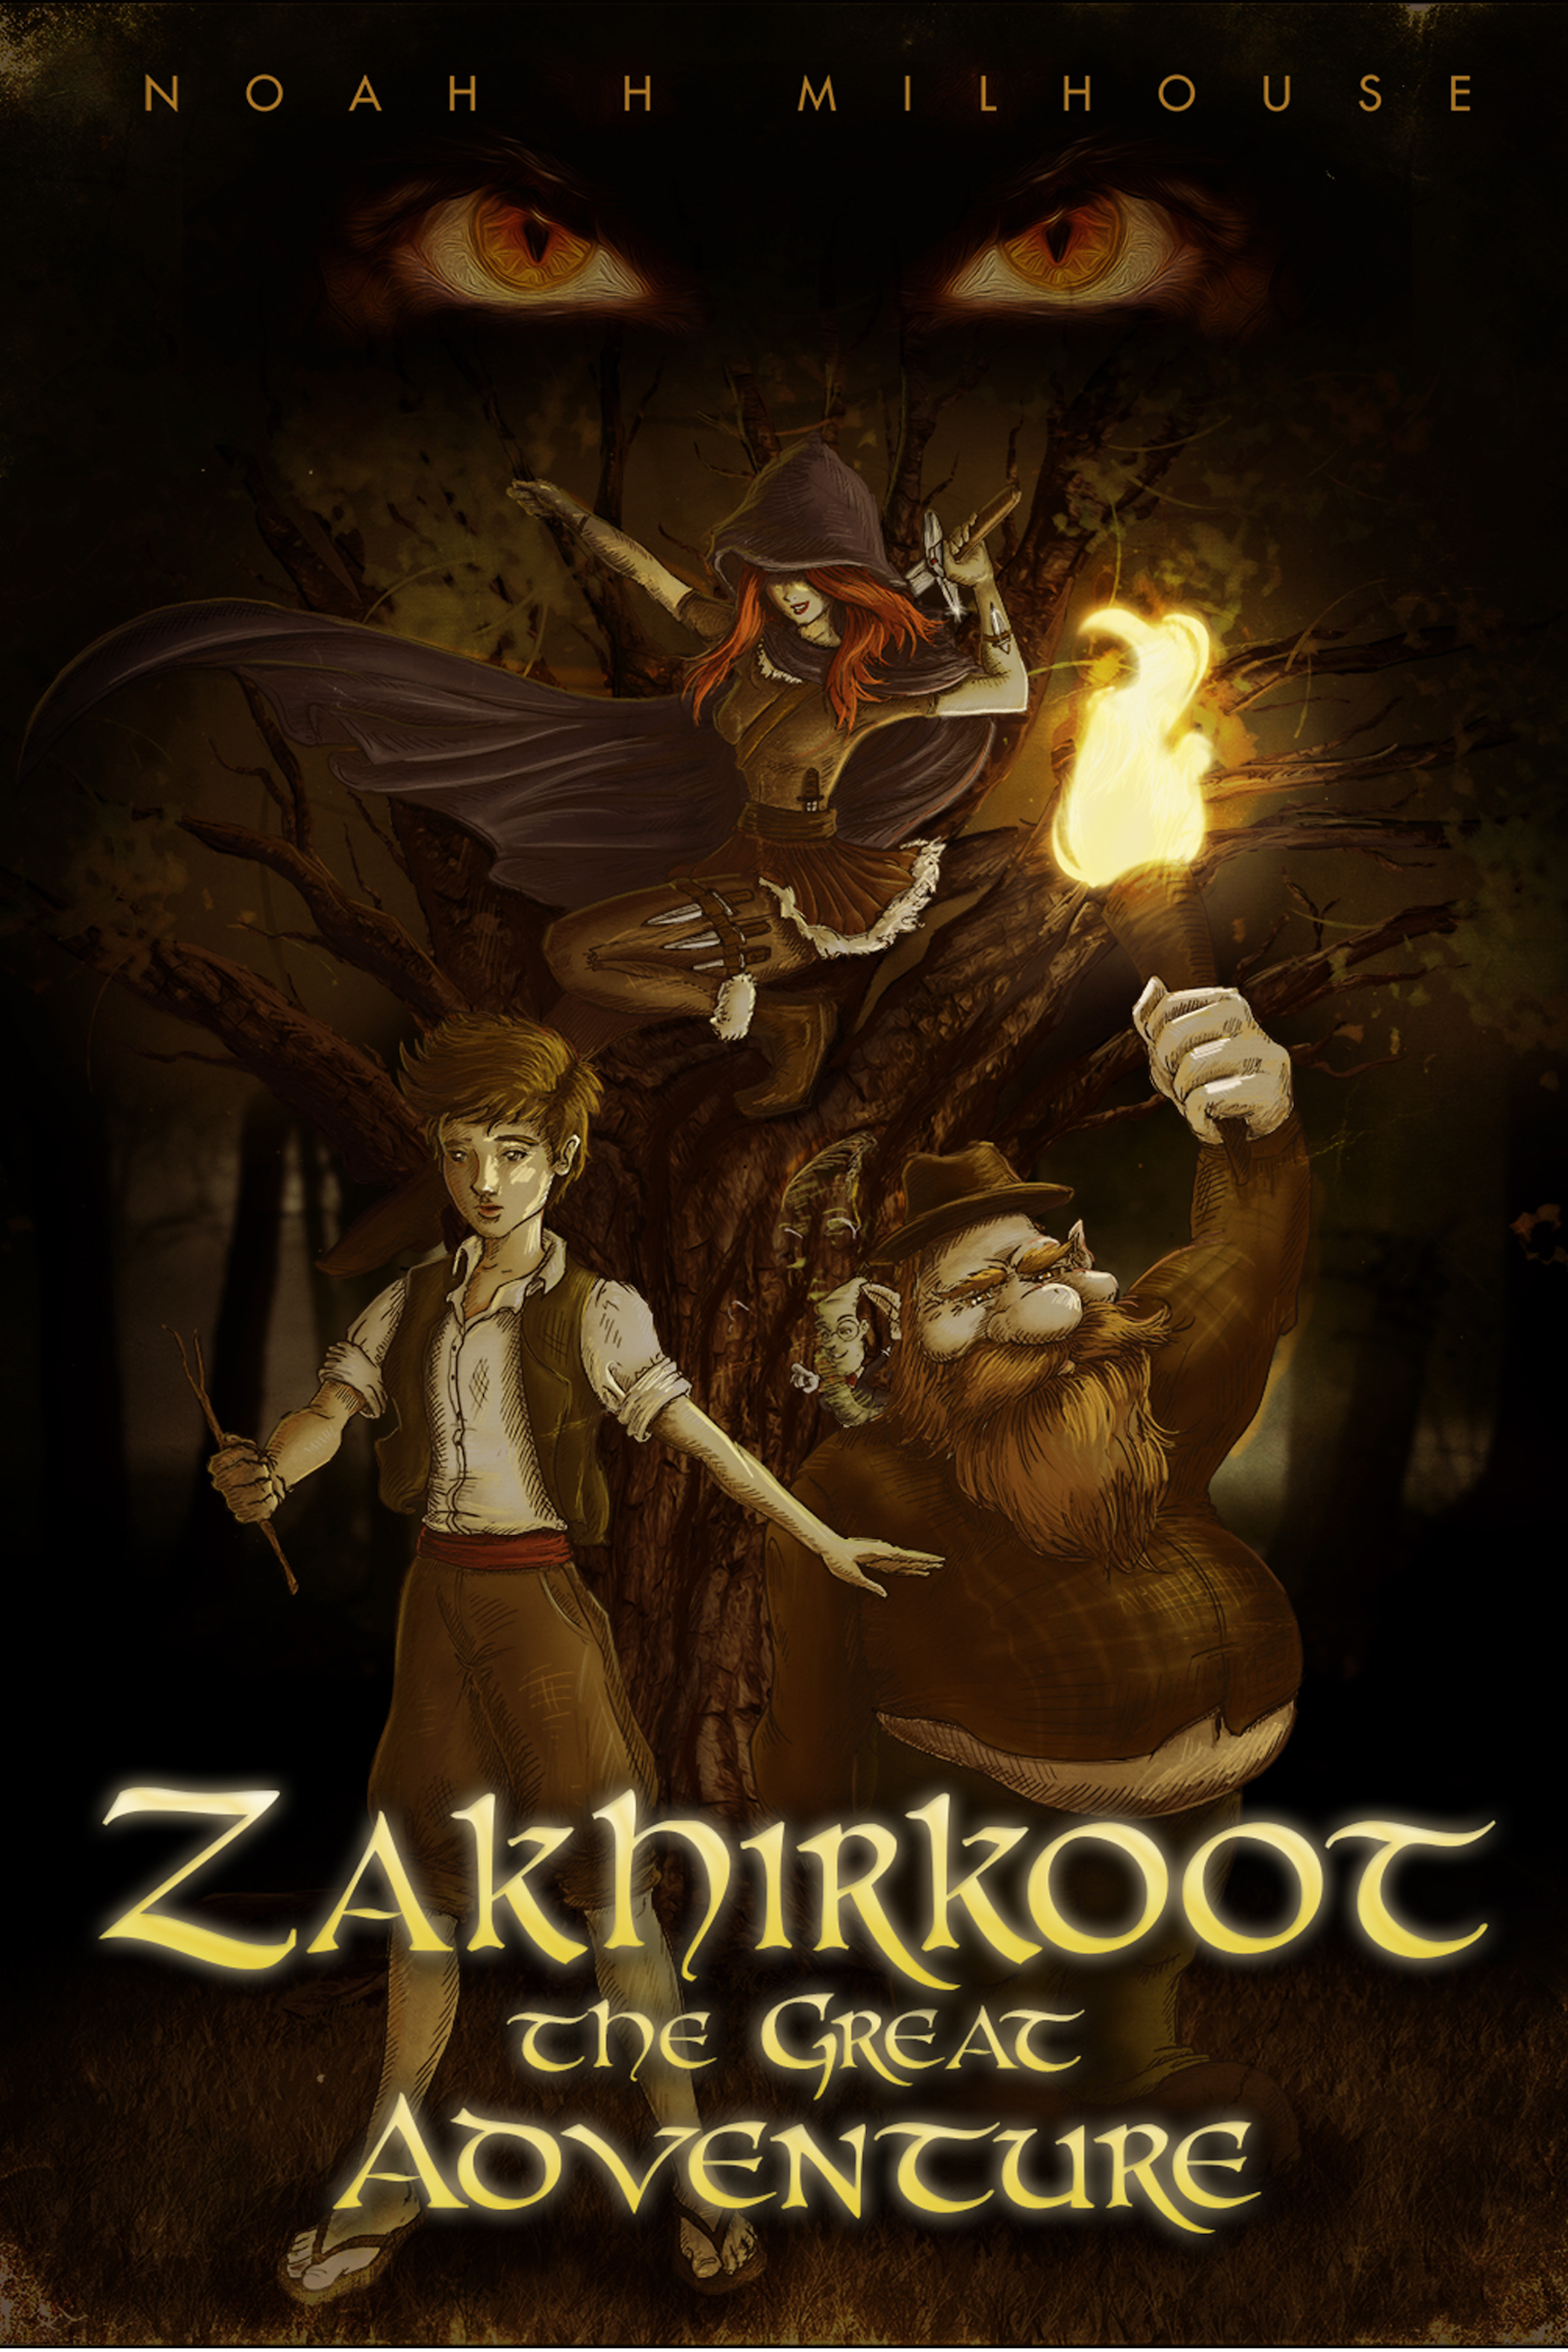 FREE: Zakhirkoot: The Great Adventure by Noah Milhouse